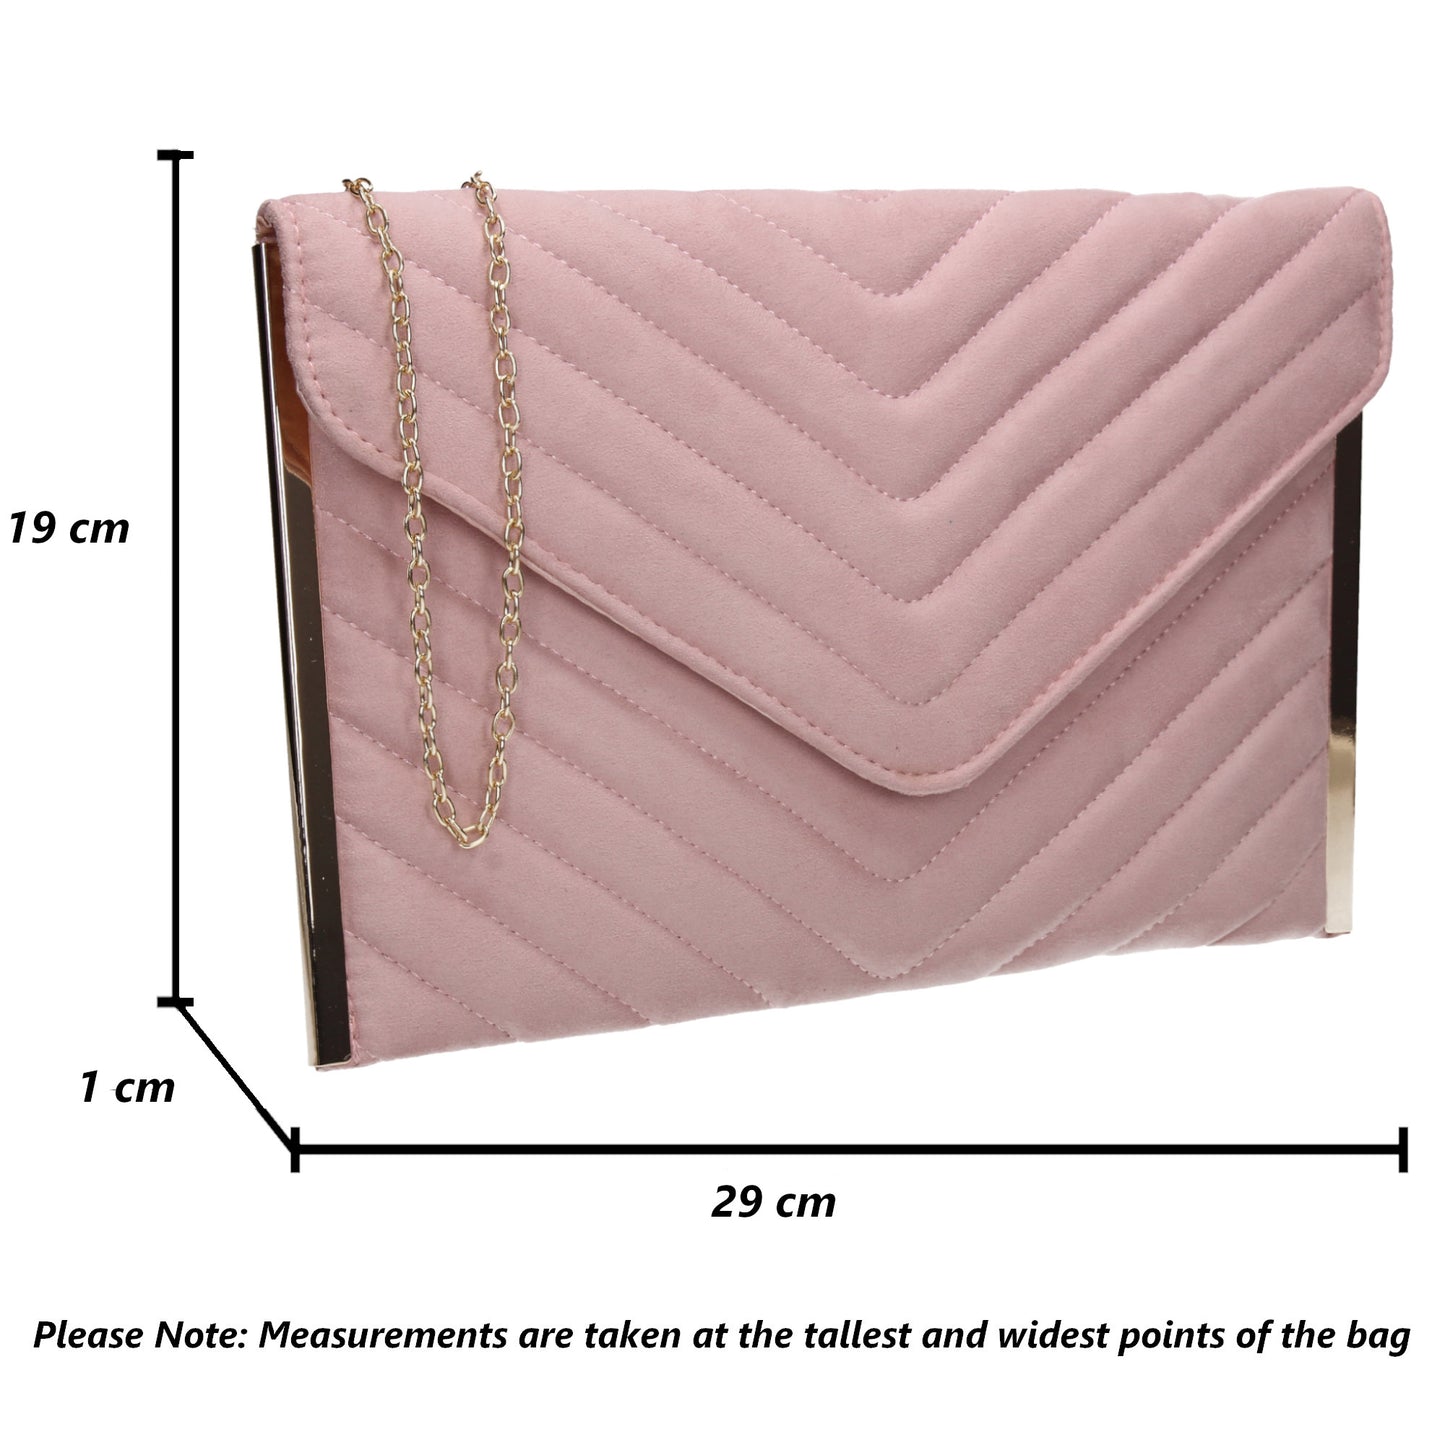 SWANKYSWANS Tessa Clutch Bag Pink Cute Cheap Clutch Bag For Weddings School and Work